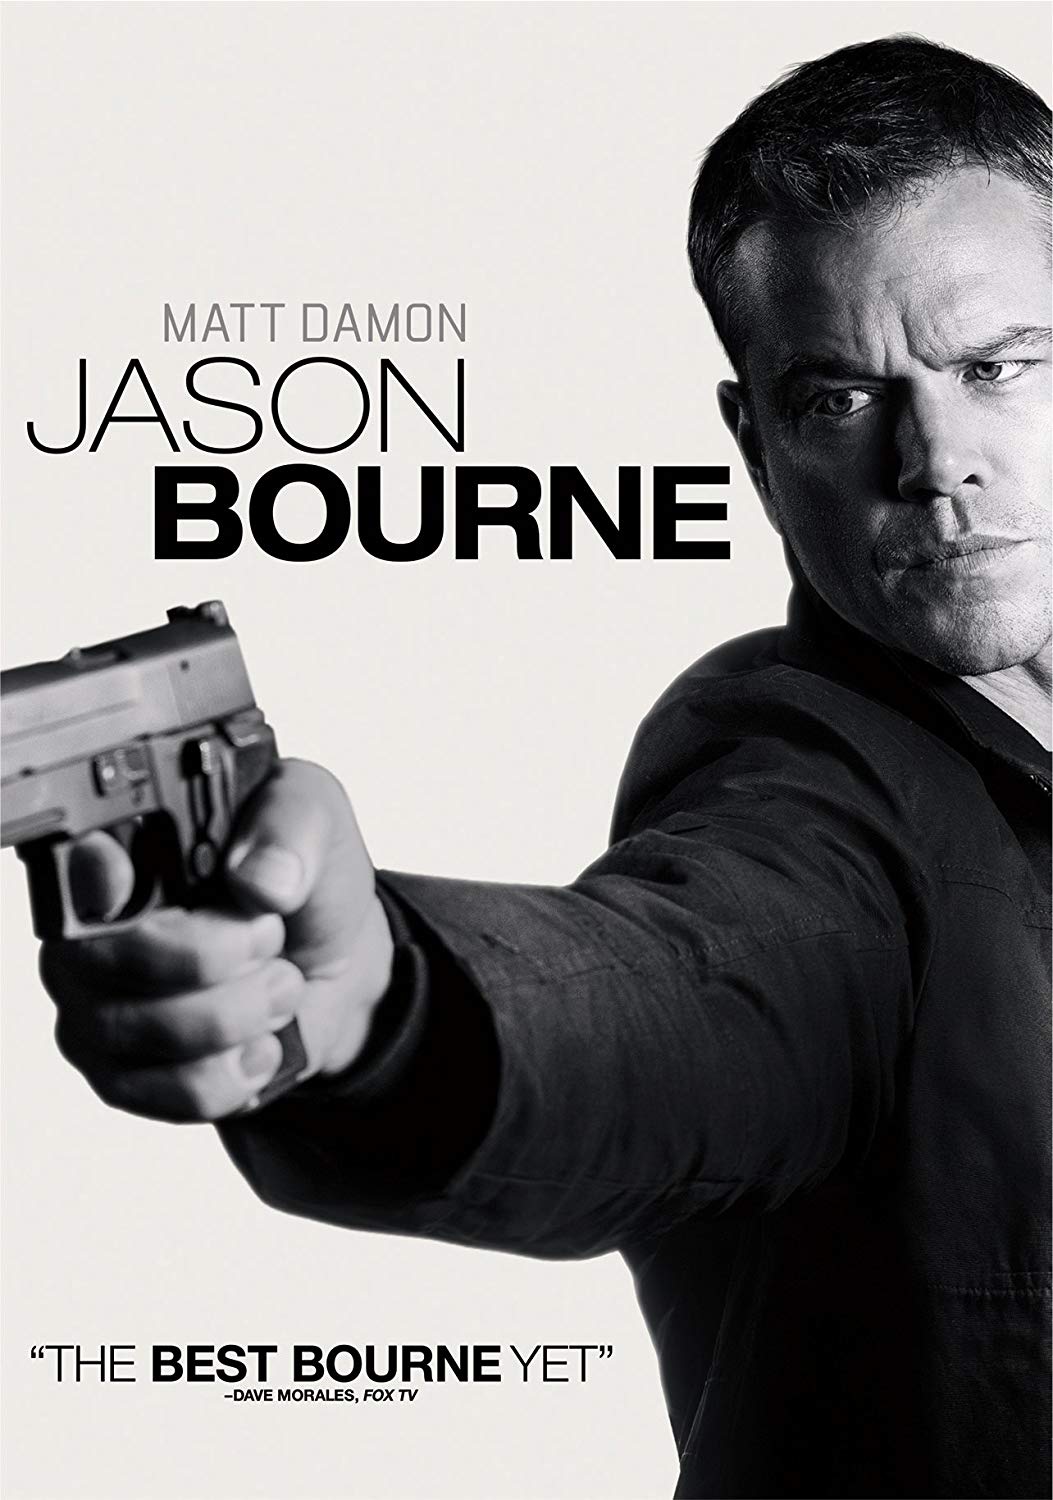 Siêu Điệp Viên Jason Bourne